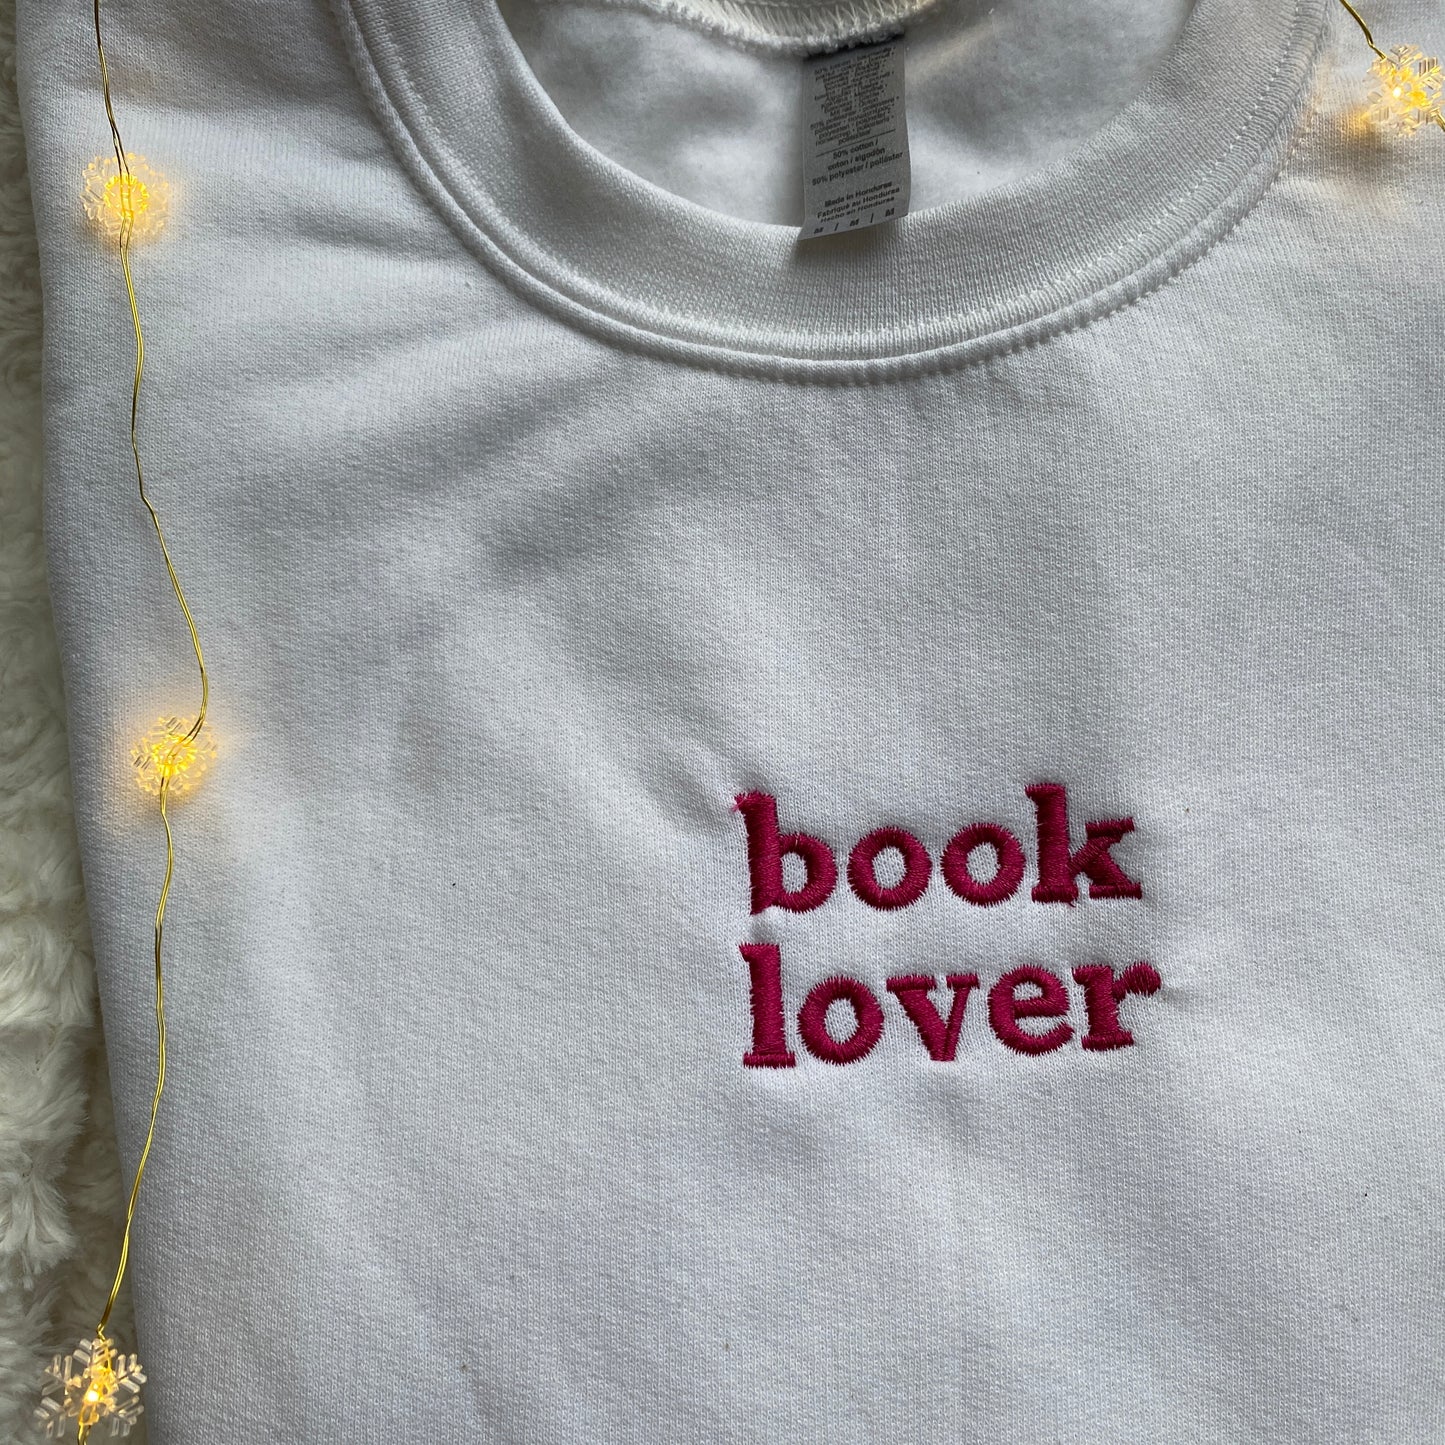 Book Lover Embroidered Sweatshirt